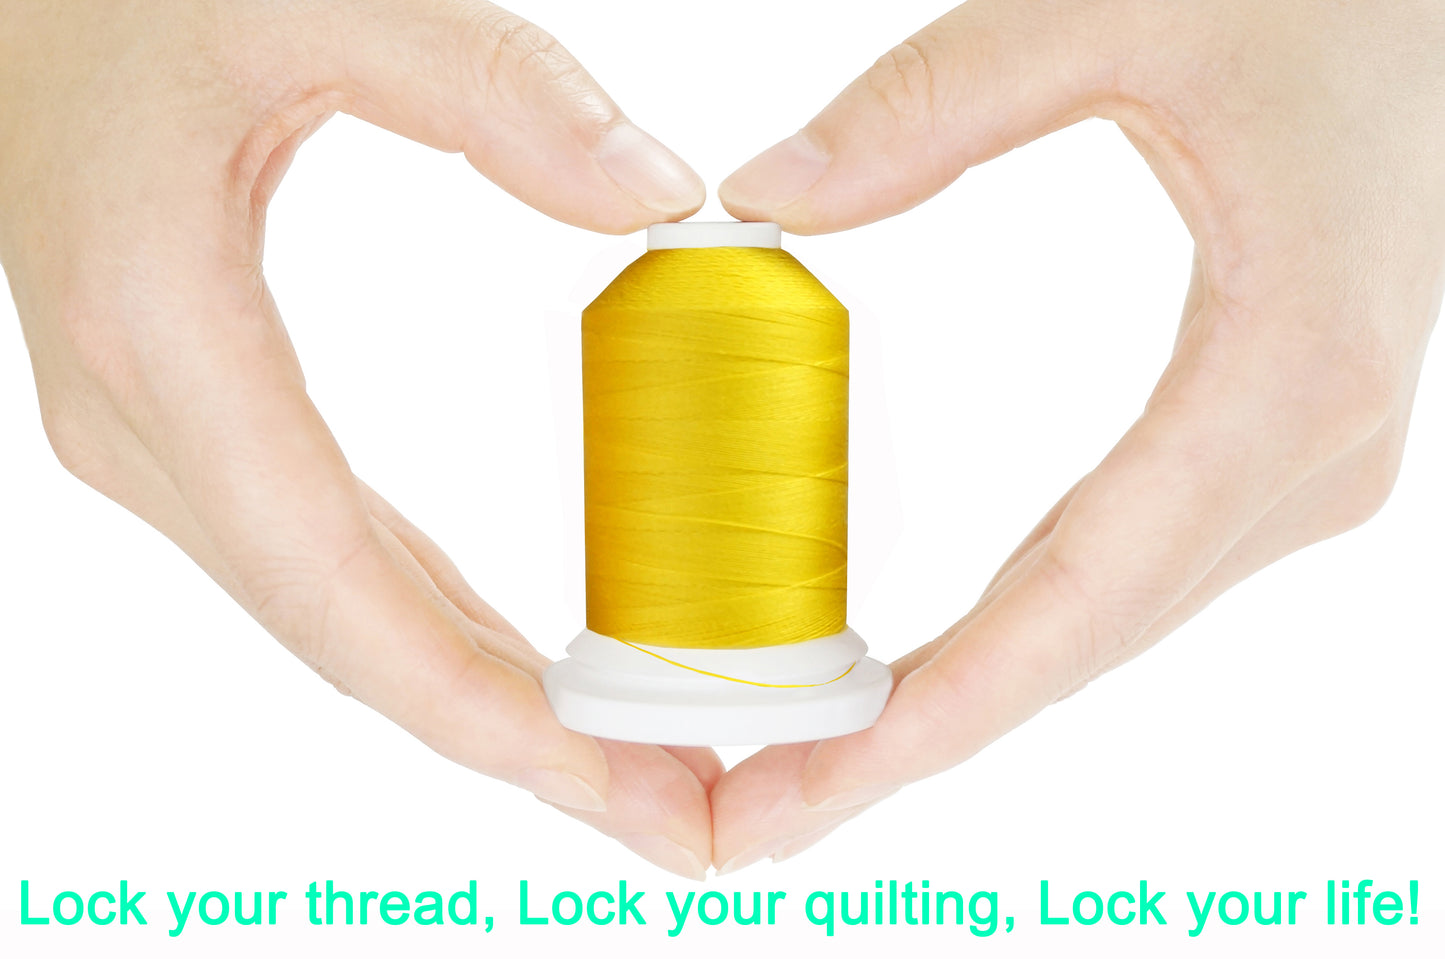 New brothread 24 Basic Colors Multi-Purpose 100% Mercerized Cotton Threads 30WT(50S/3) 600M(660Y) Each Spool